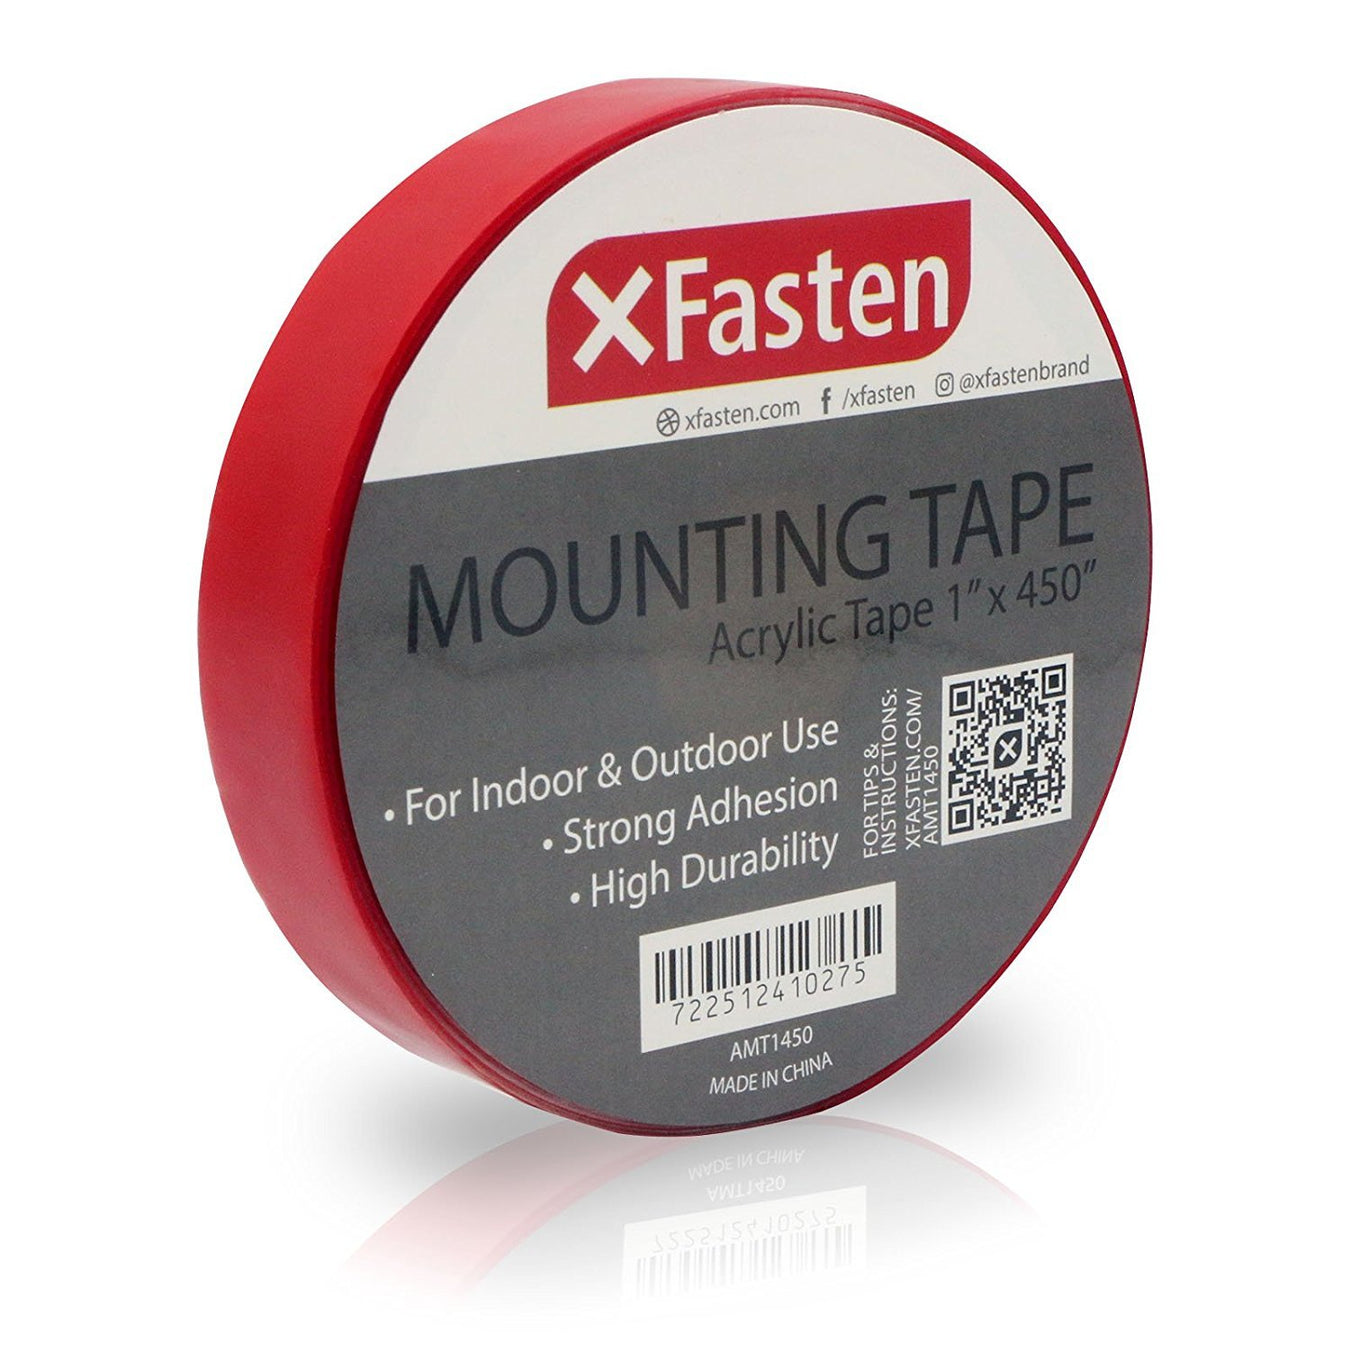 Acrylic Mounting Tape - XFasten